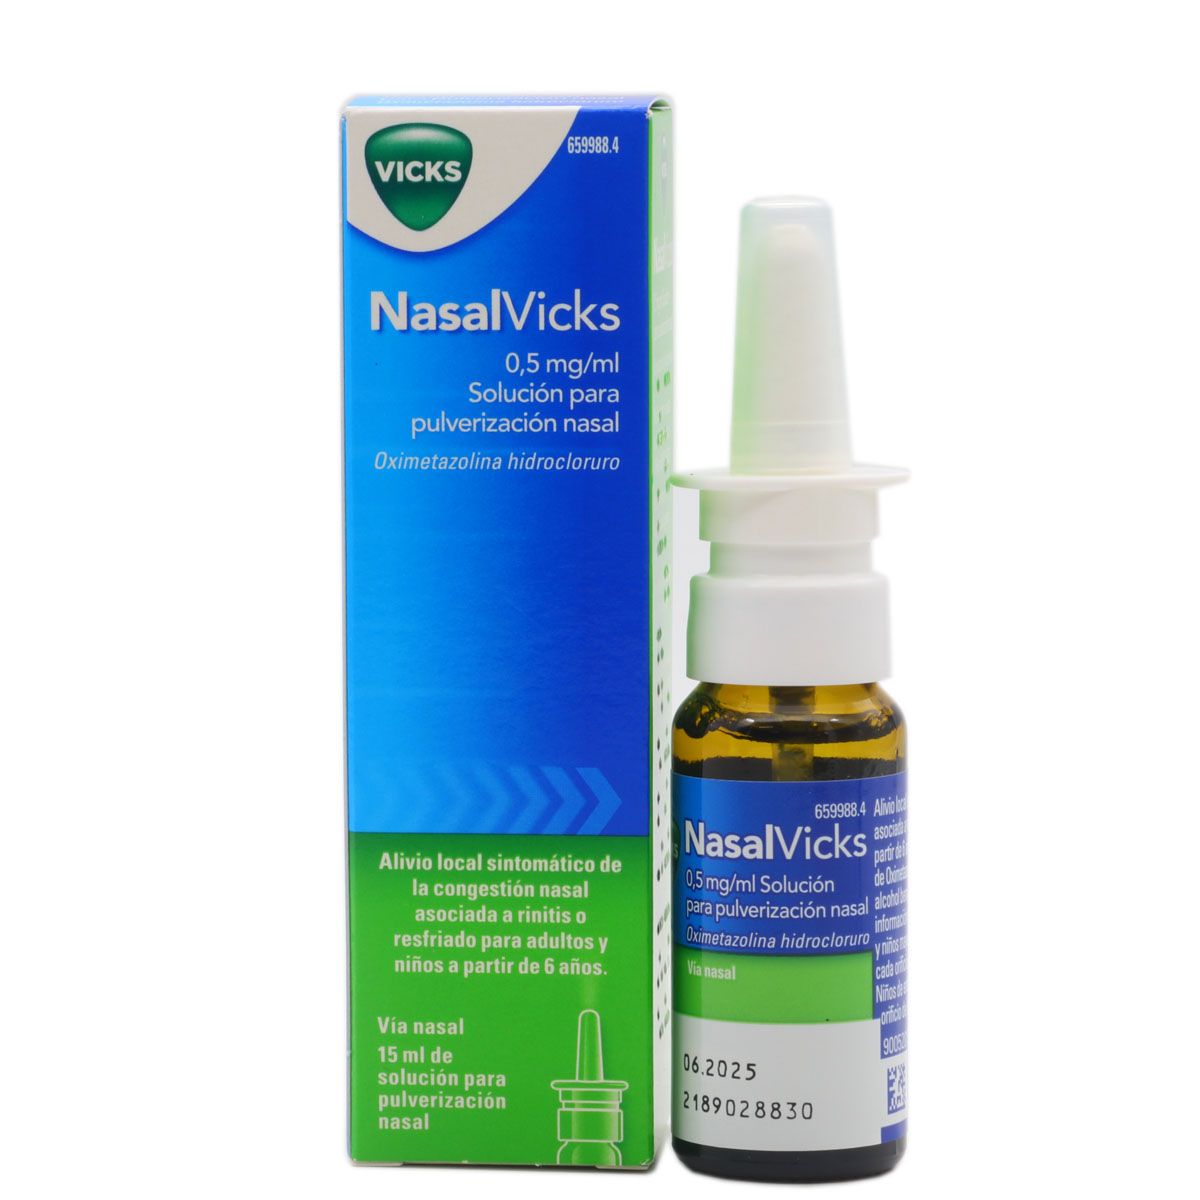 Respibien Antialérgico Spray Nasal 15ml